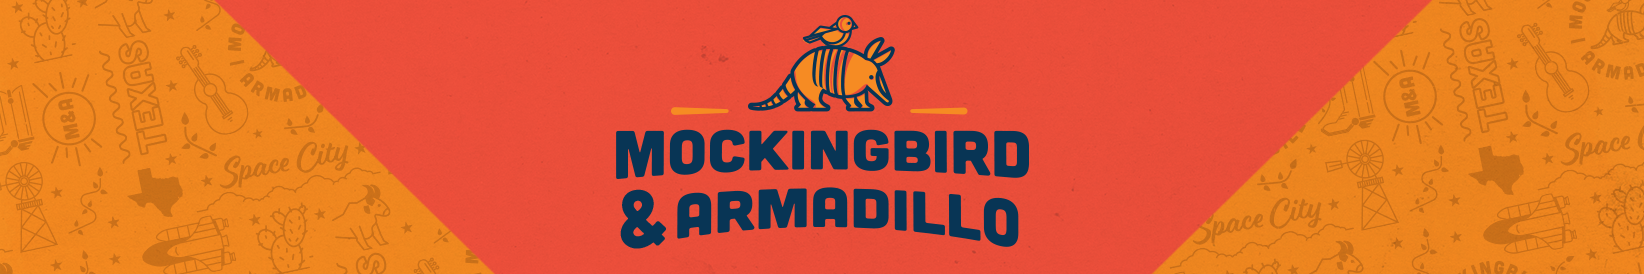 Mockingbird & Armadillo page banner